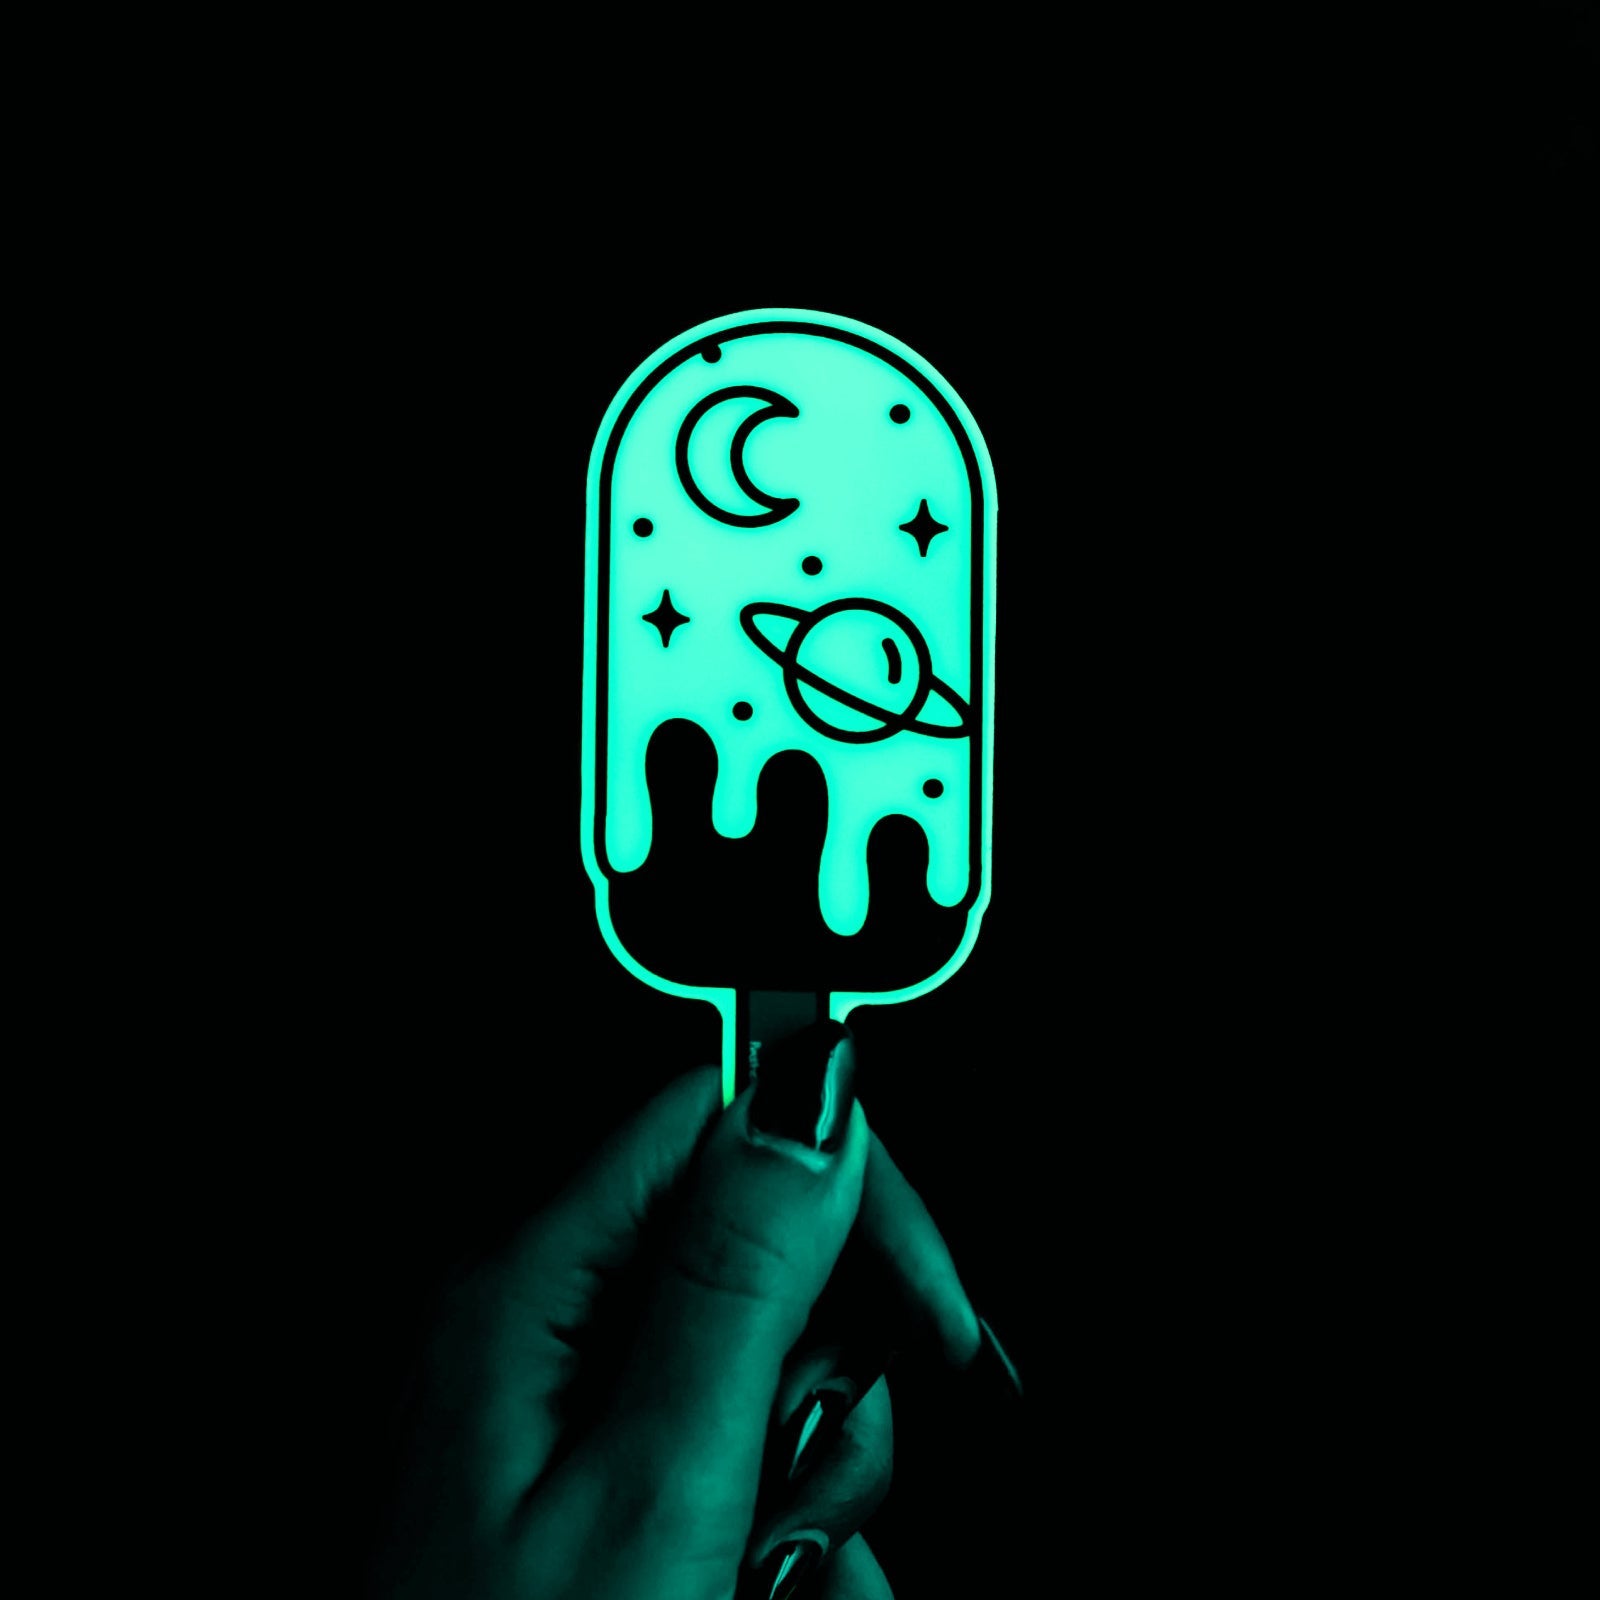 Glow in the dark - Illuminate your art - StickerApp